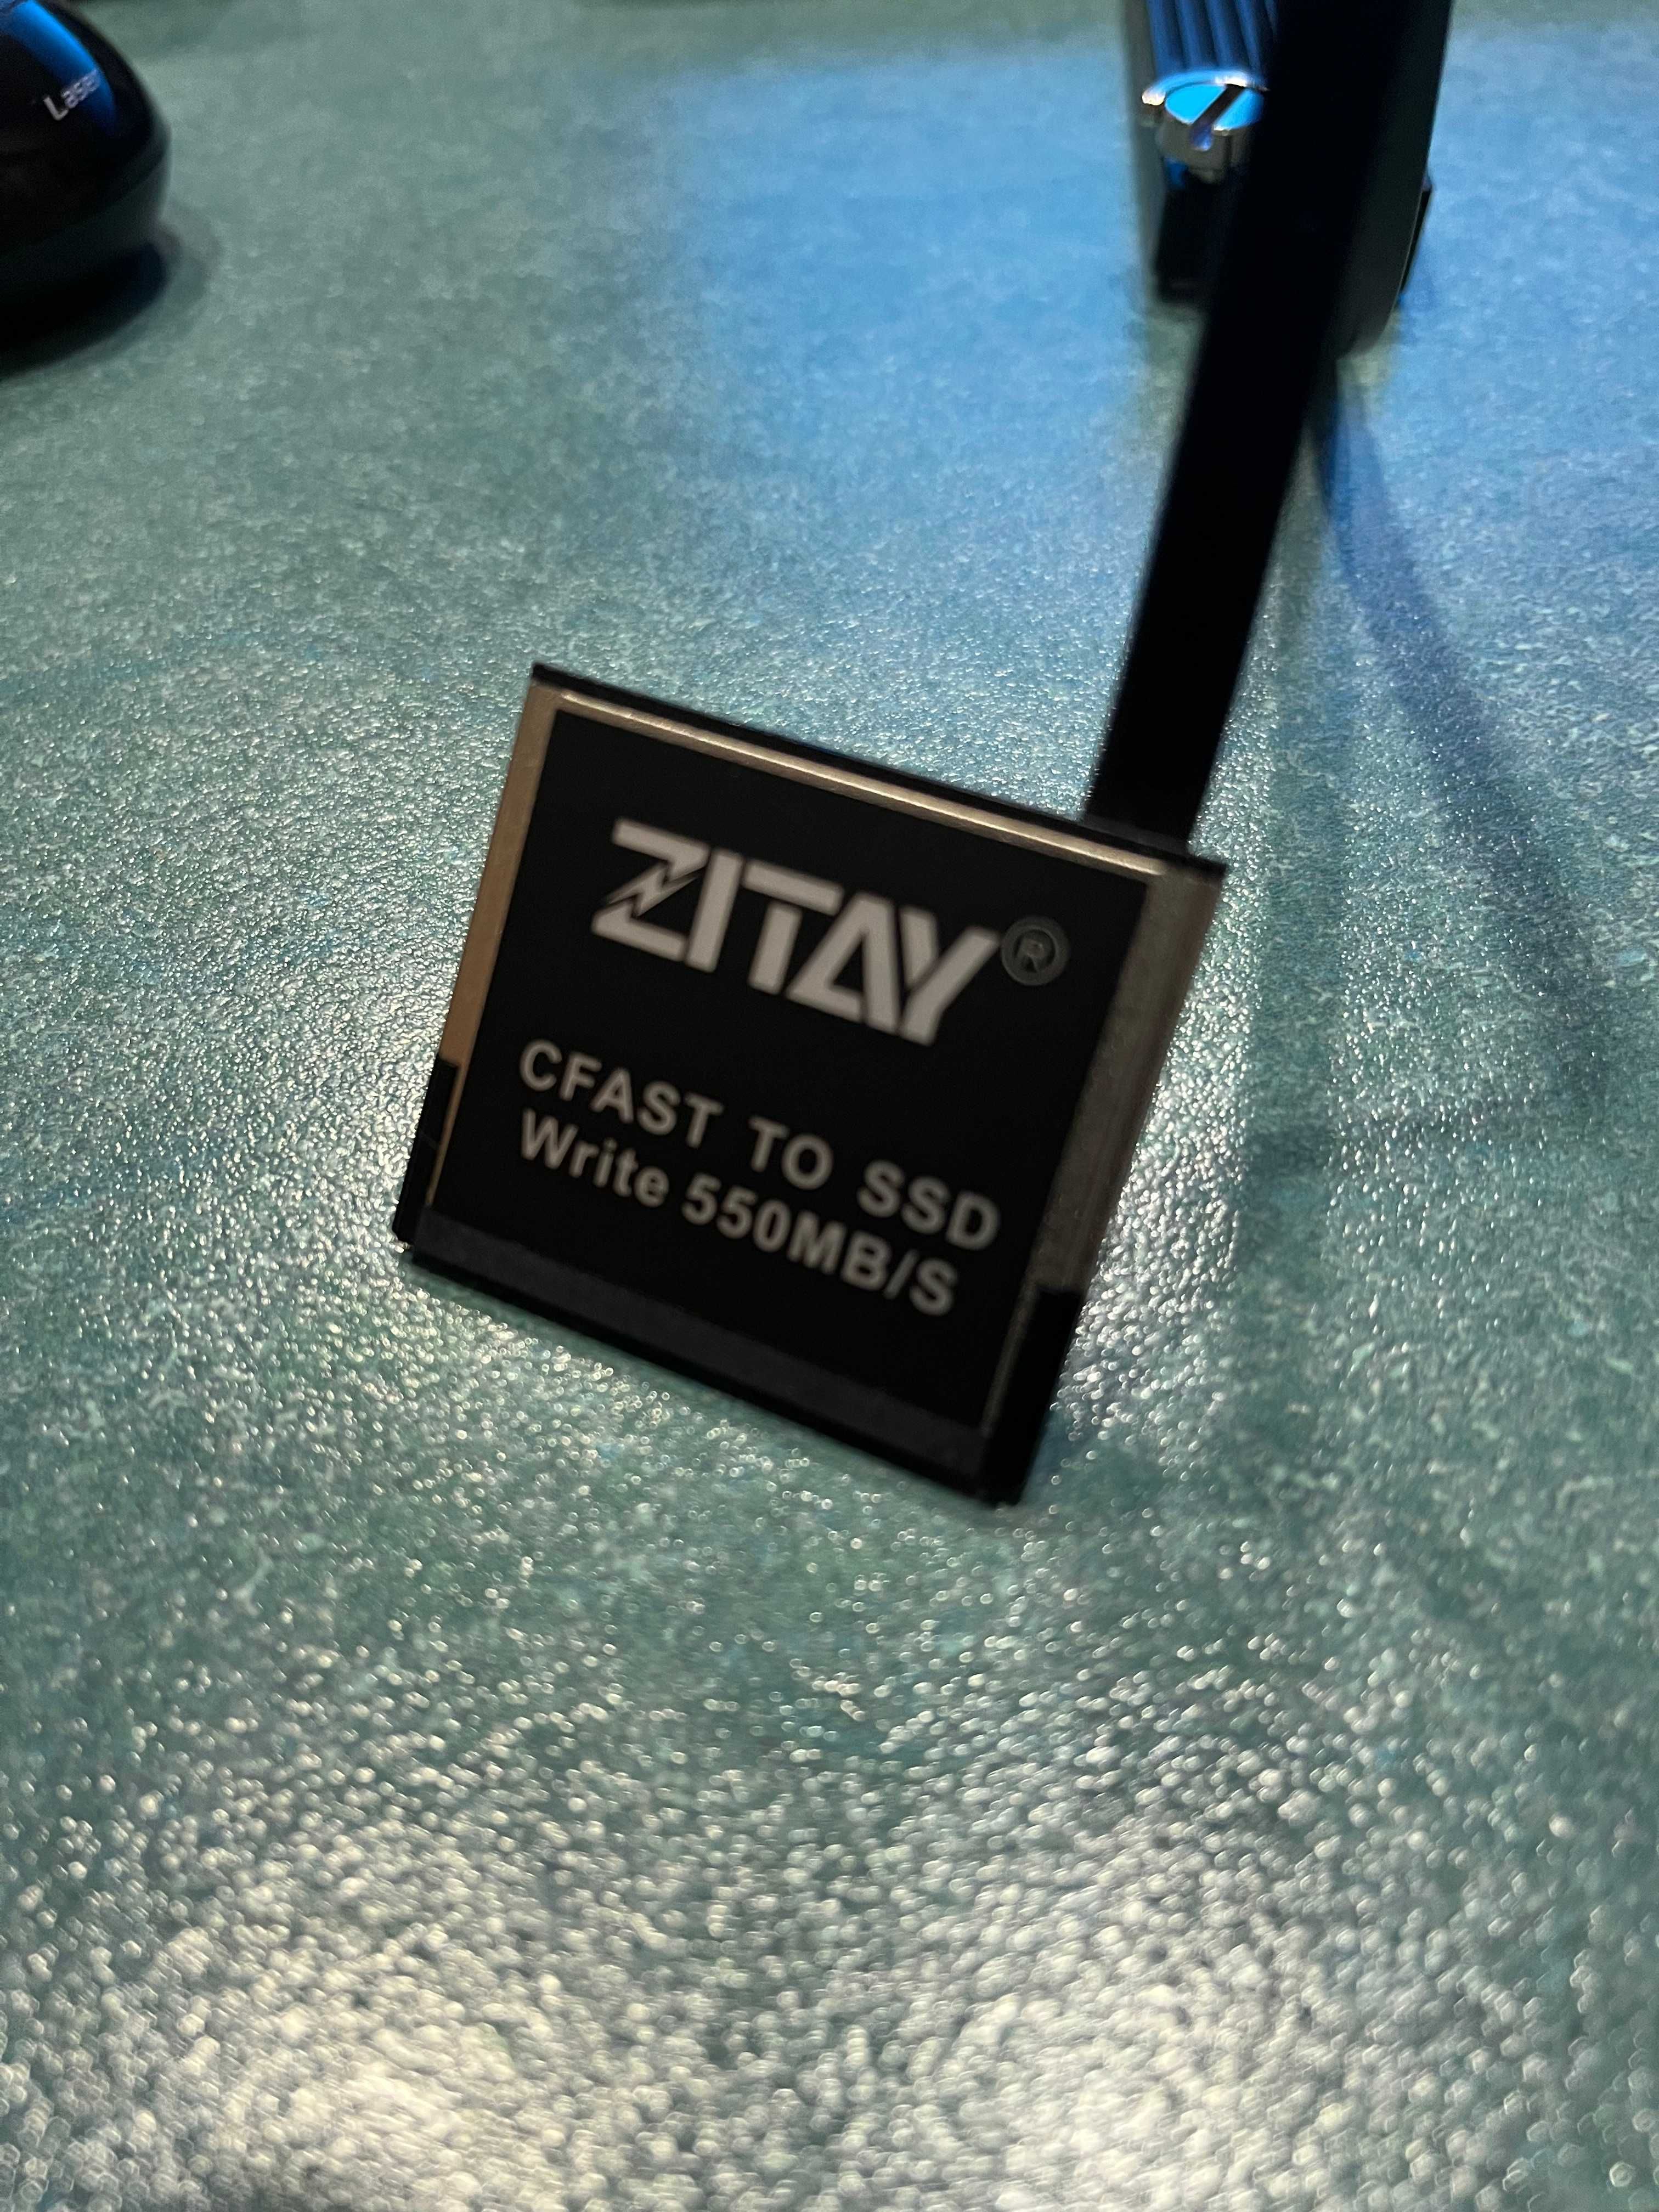 ZITAY CFast to SSD Converter